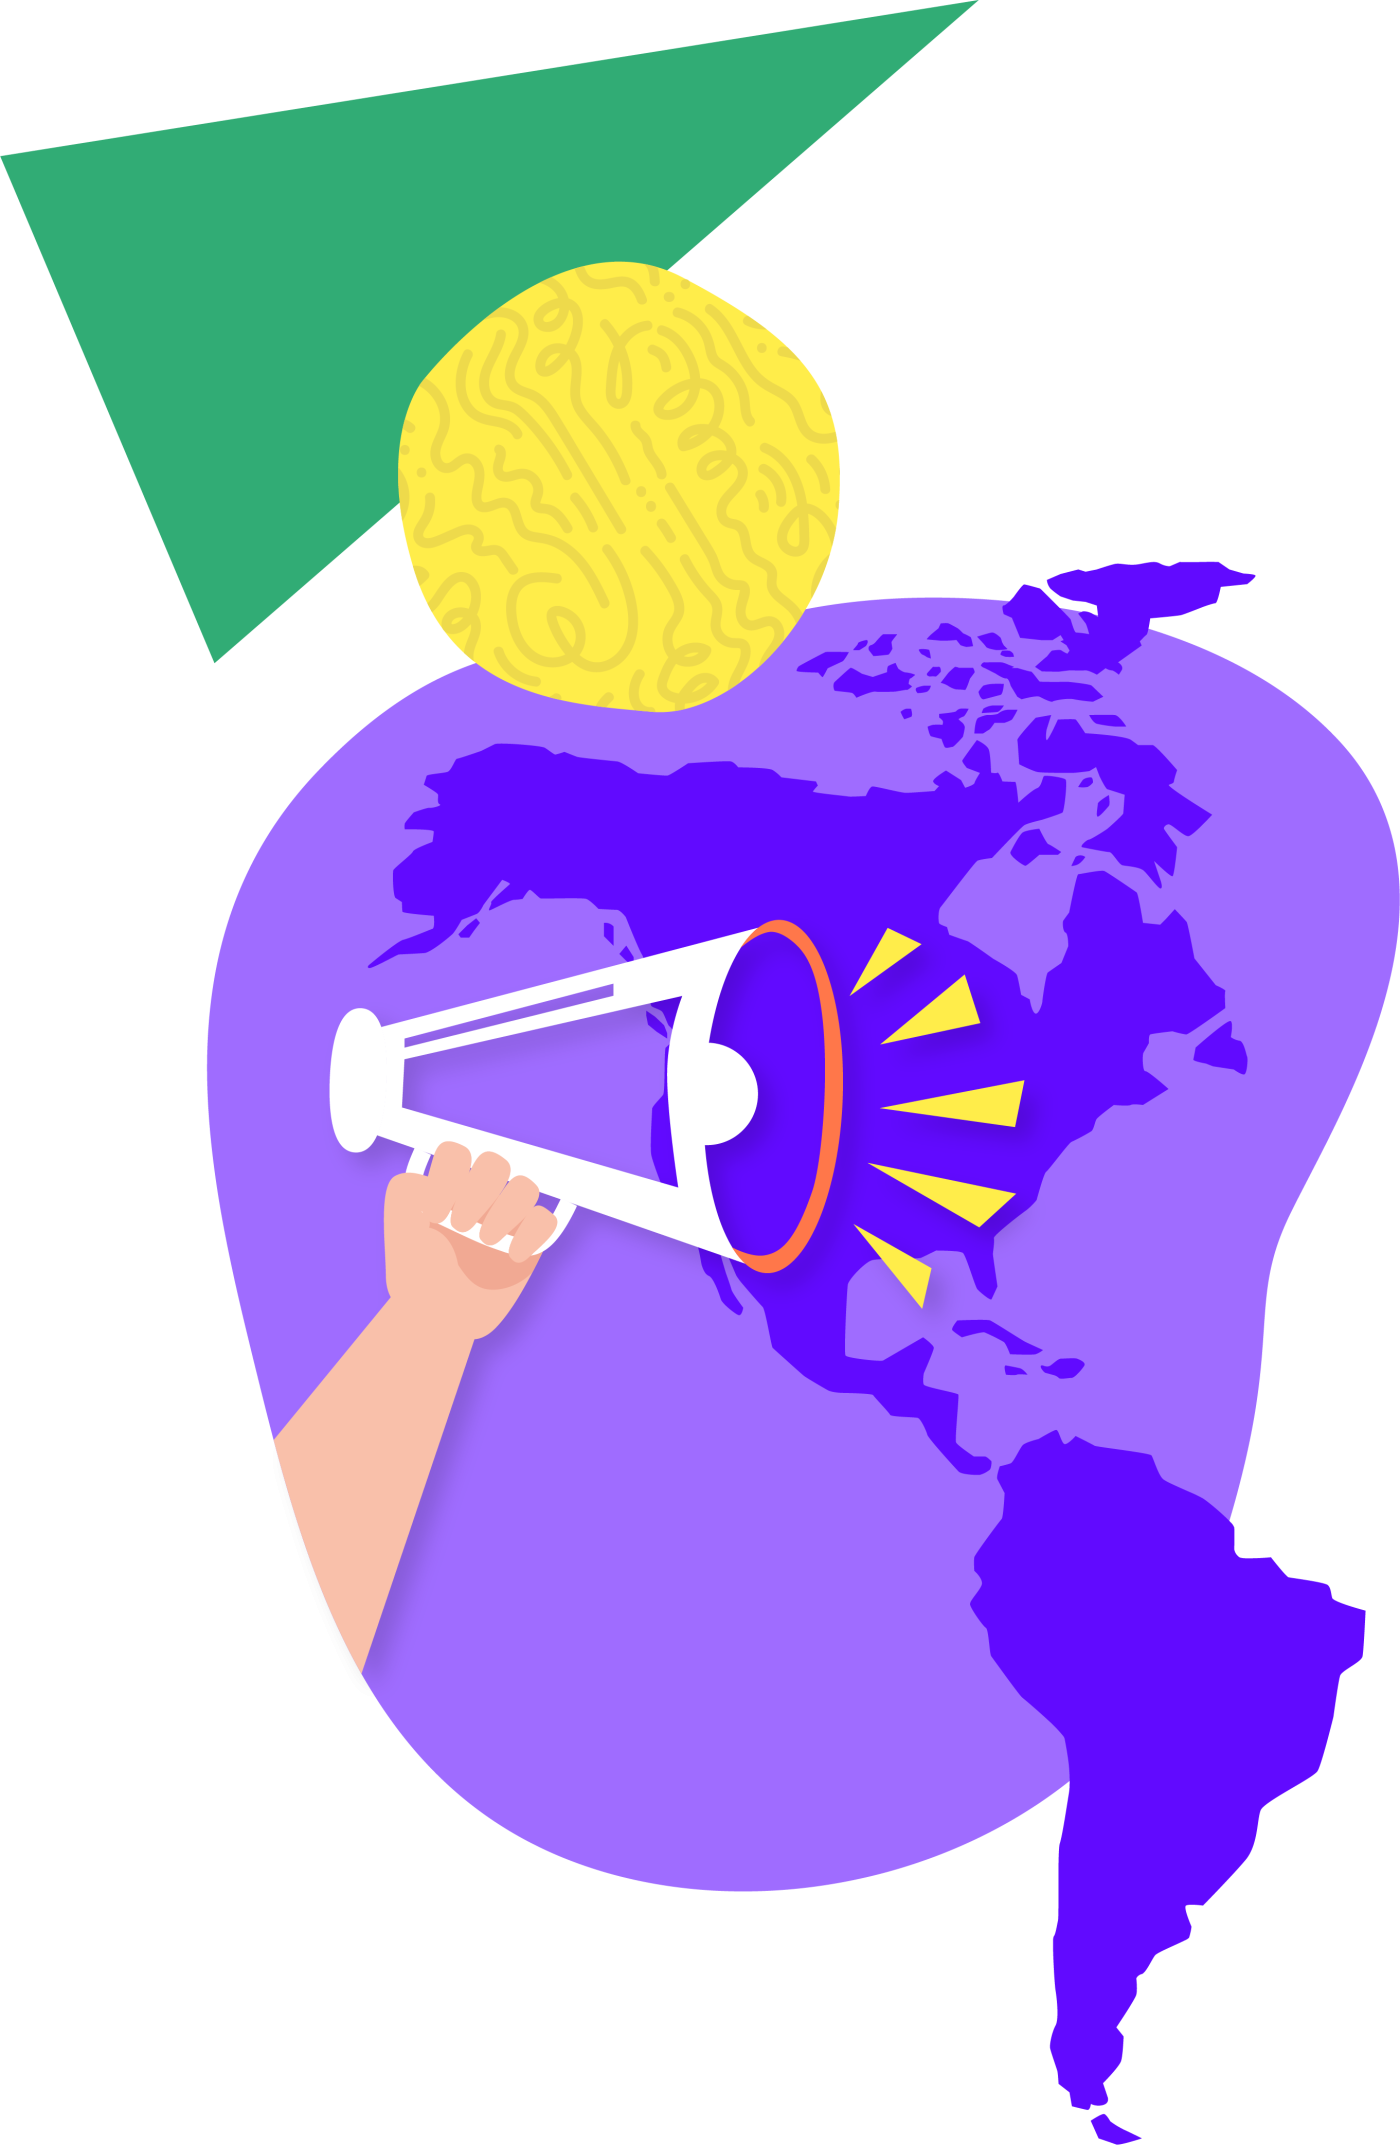 Una mano sostiene un megáfono frente a un mapa violeta del continente americano